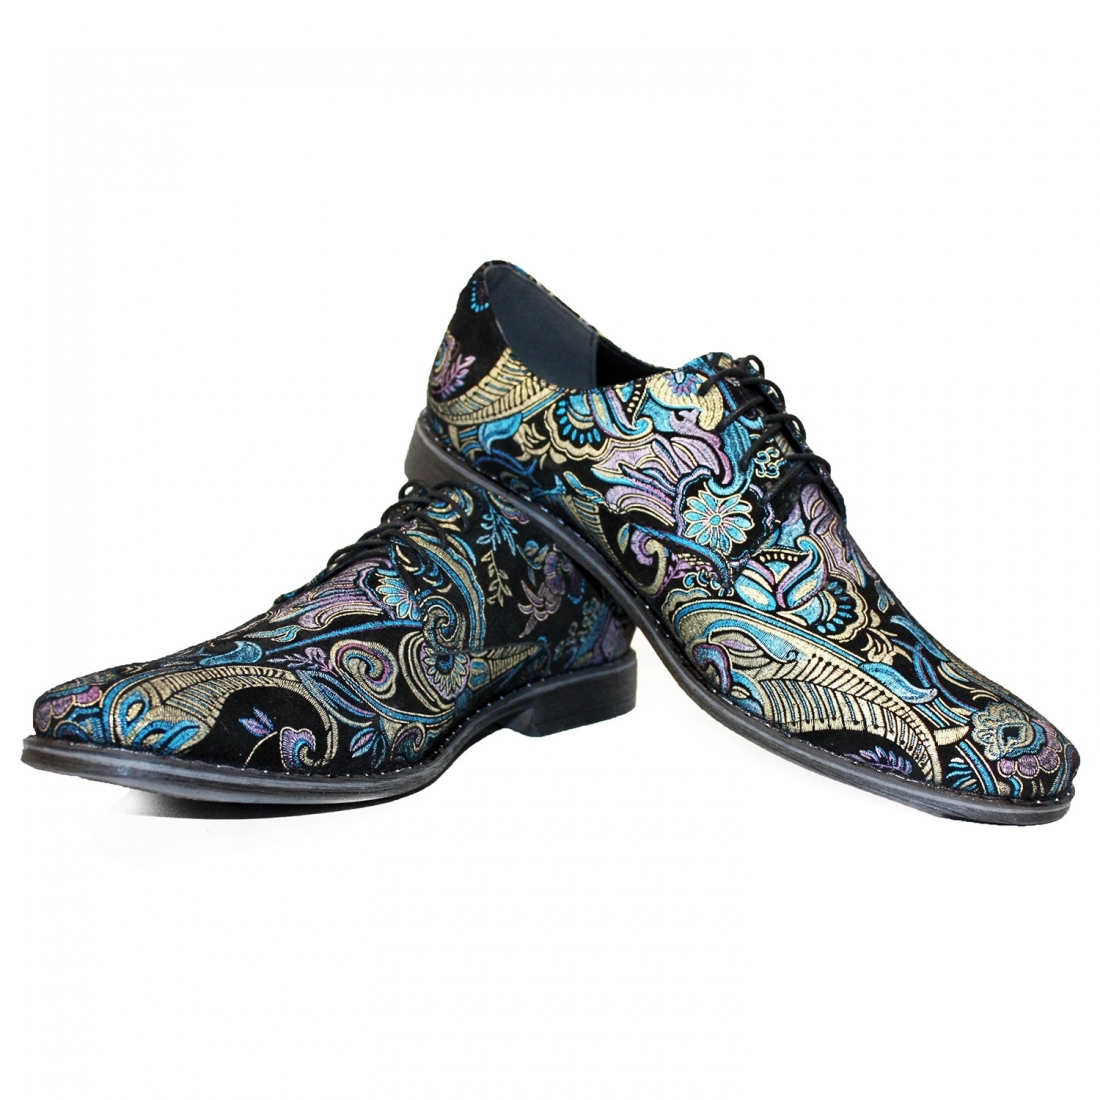 Modello Shpanerro - Schnürer - Handmade Colorful Italian Leather Shoes